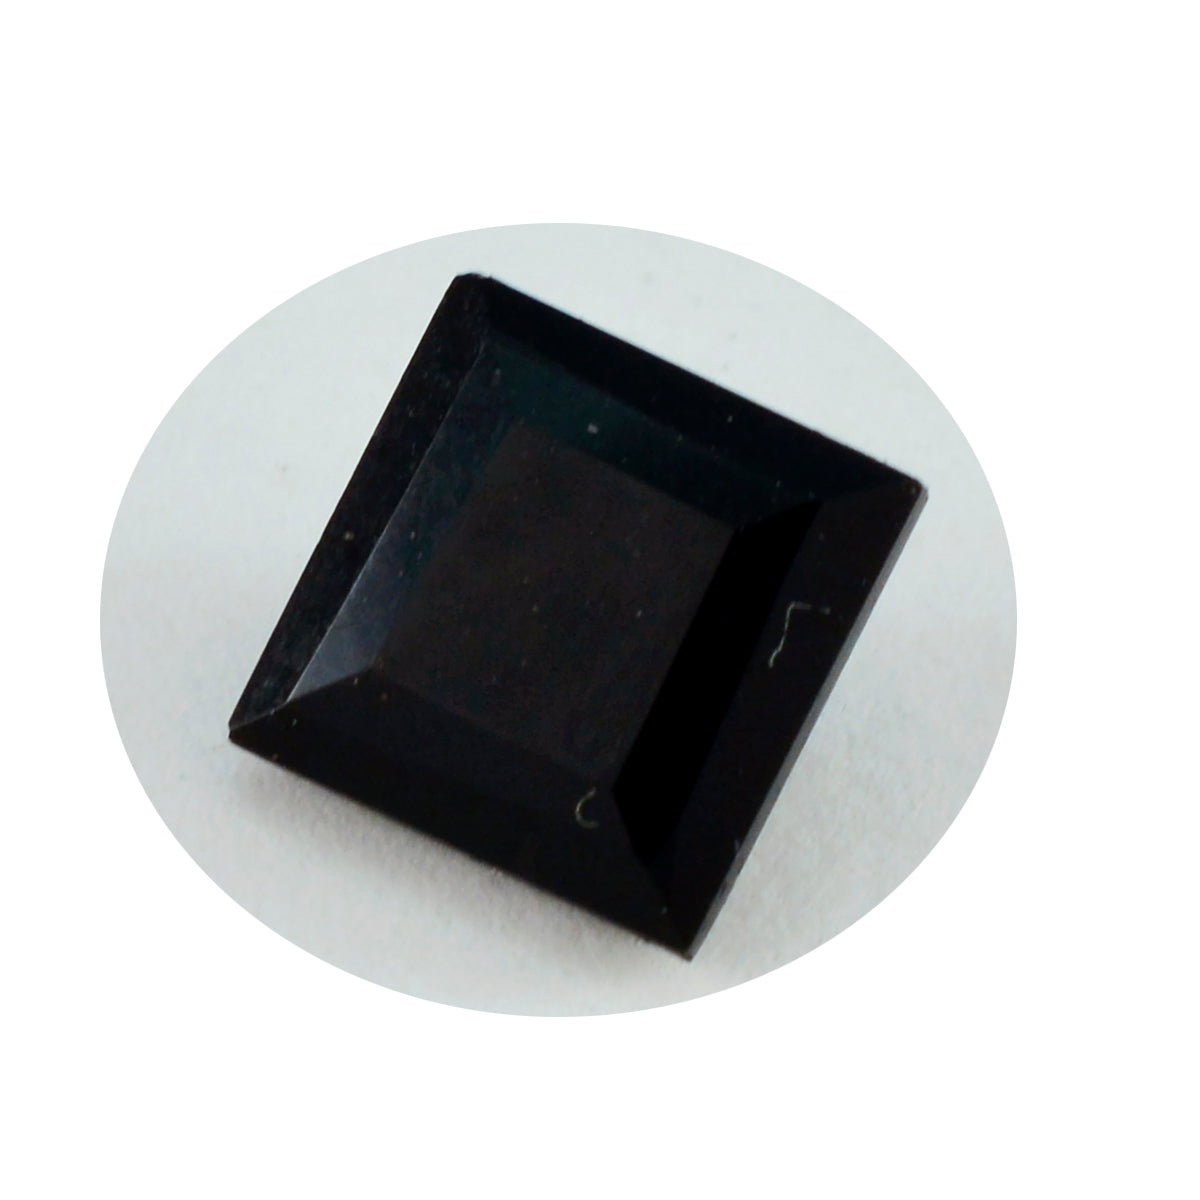 Riyogems 1PC Genuine Black Onyx Faceted 15x15 mm Square Shape AAA Quality Loose Stone